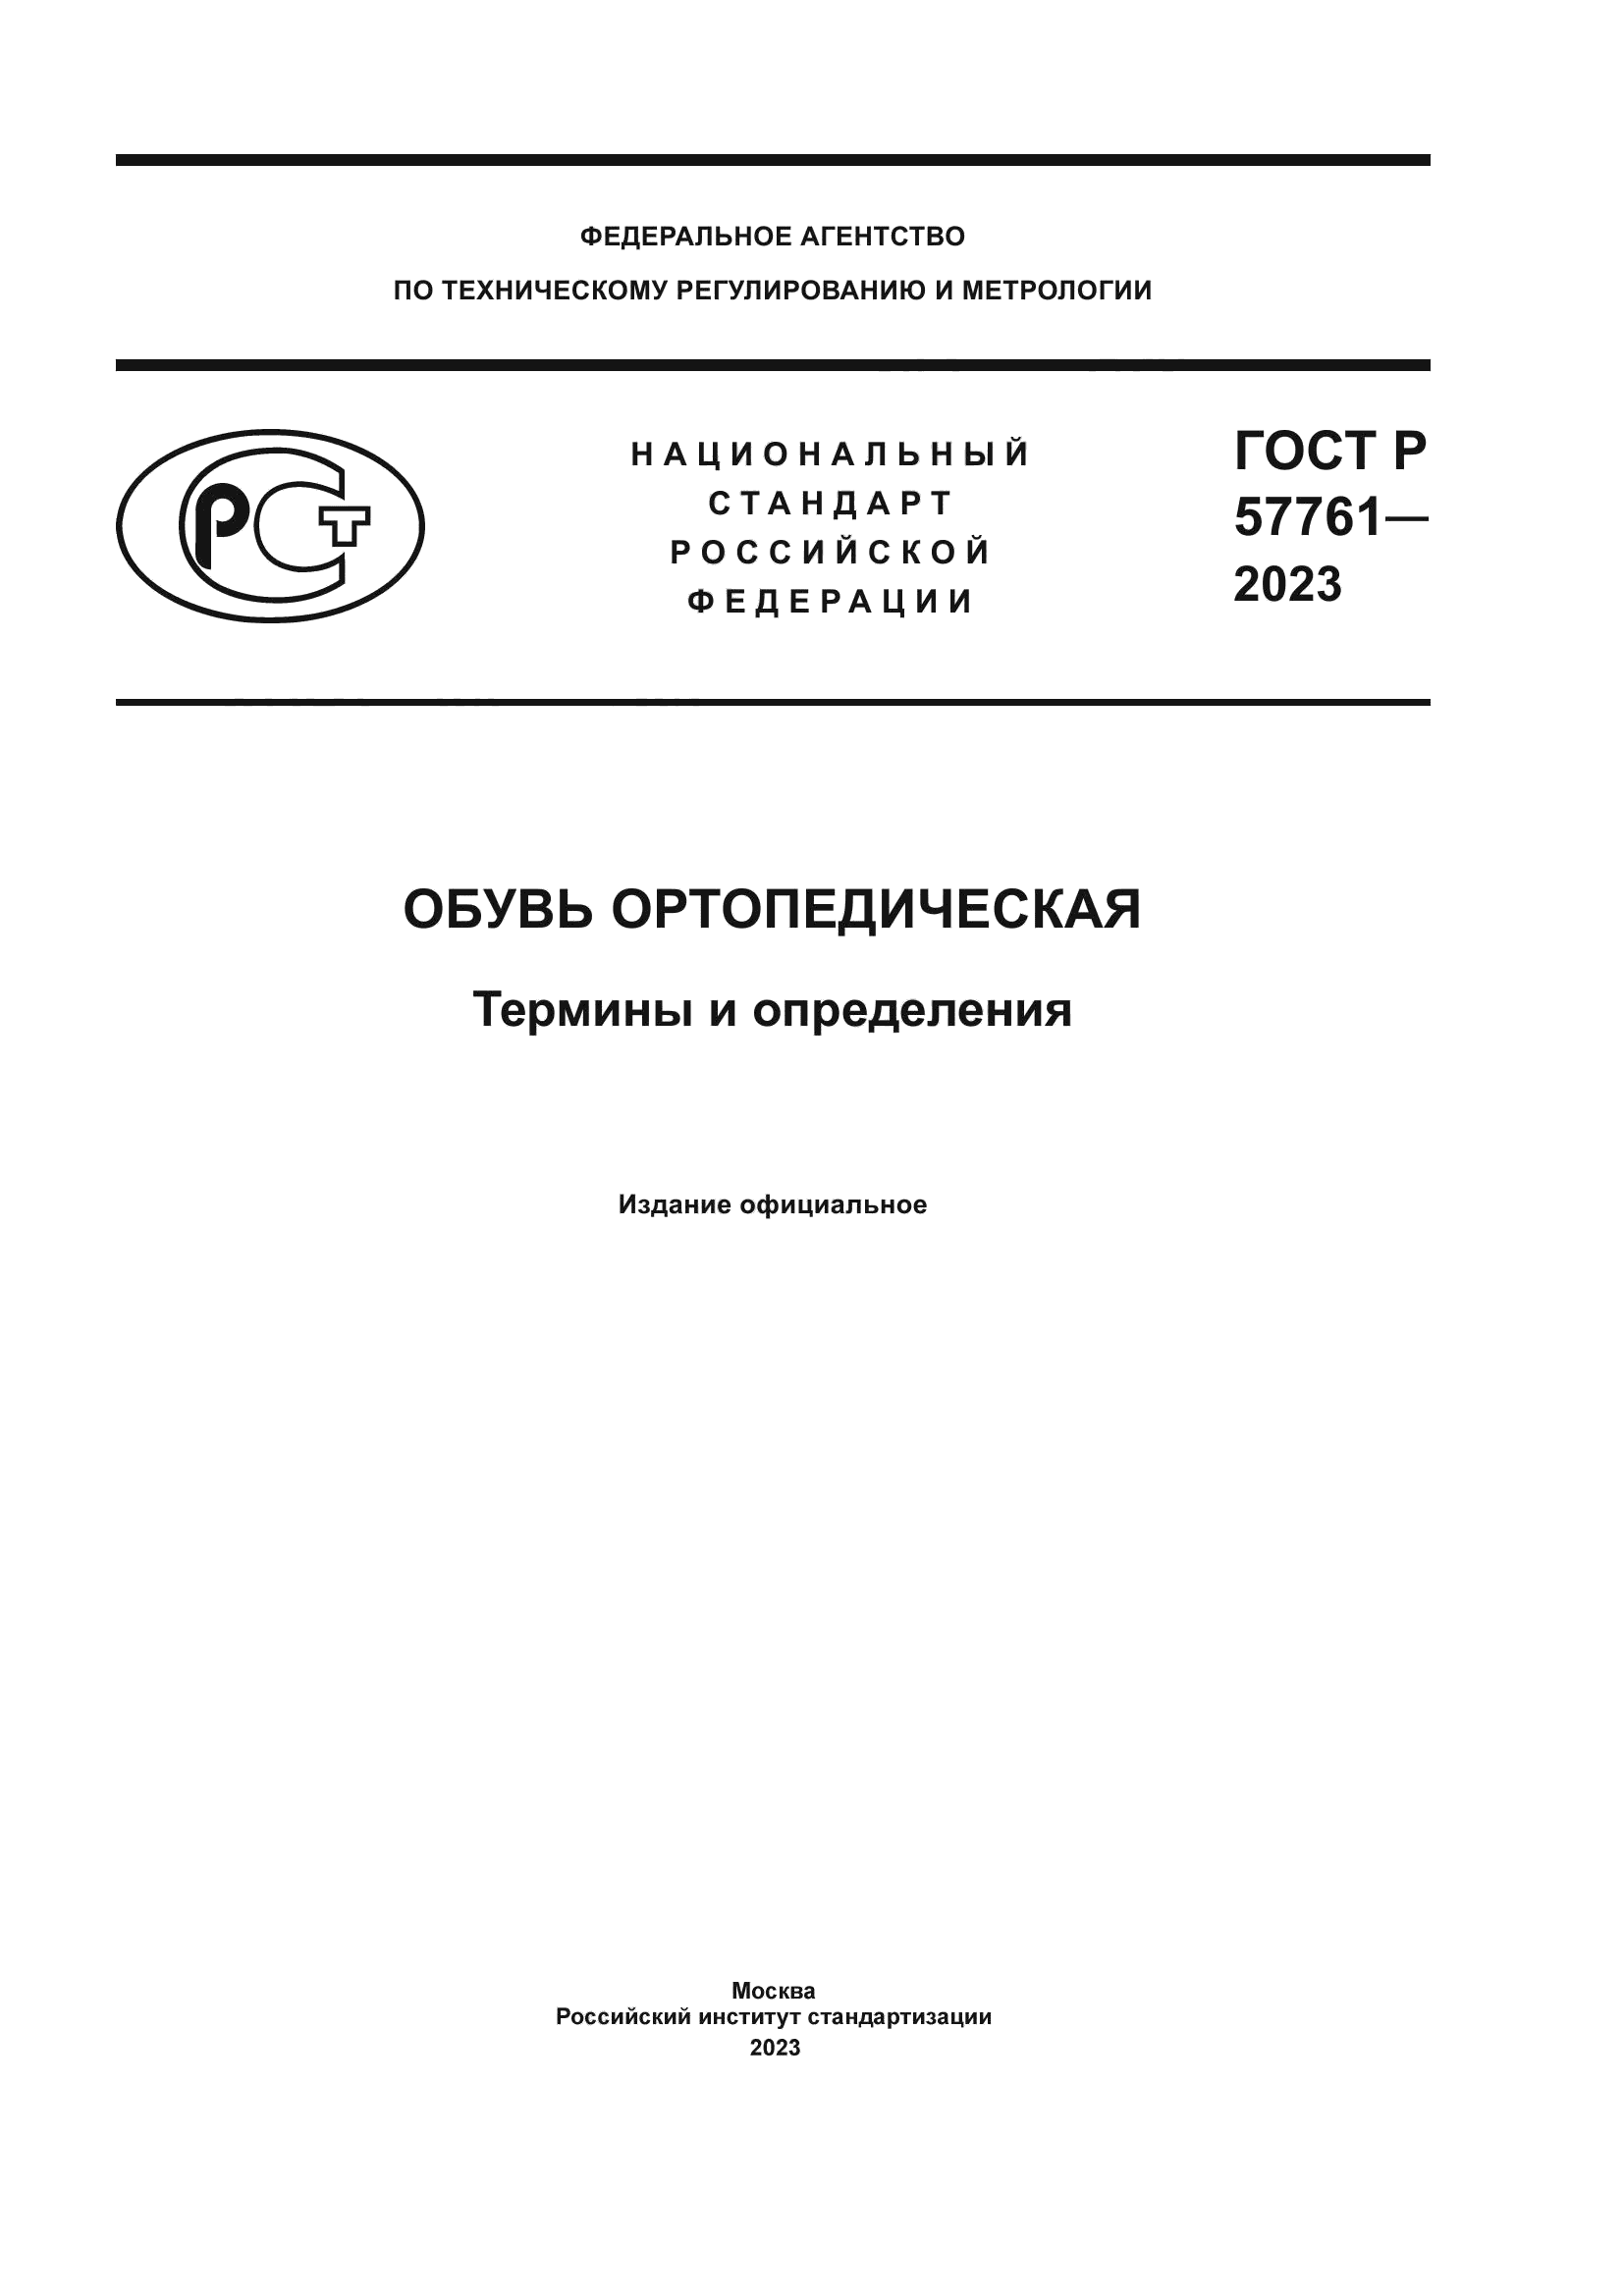 ГОСТ Р 57761-2023